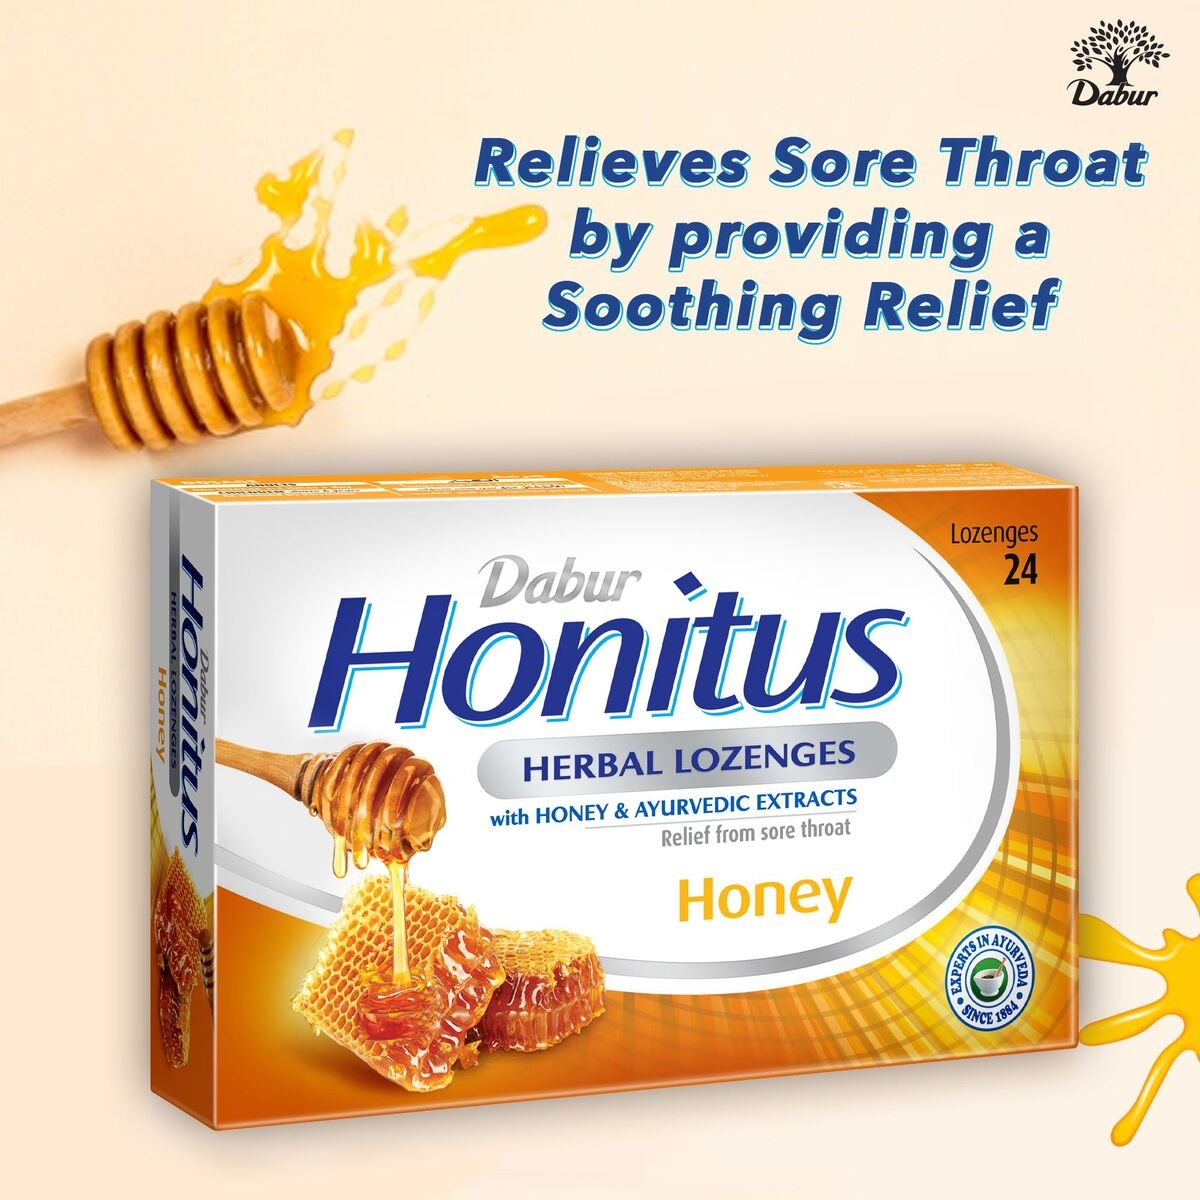 Dabur Honitus Herbal Lozenges with Honey Flavor 24 pcs